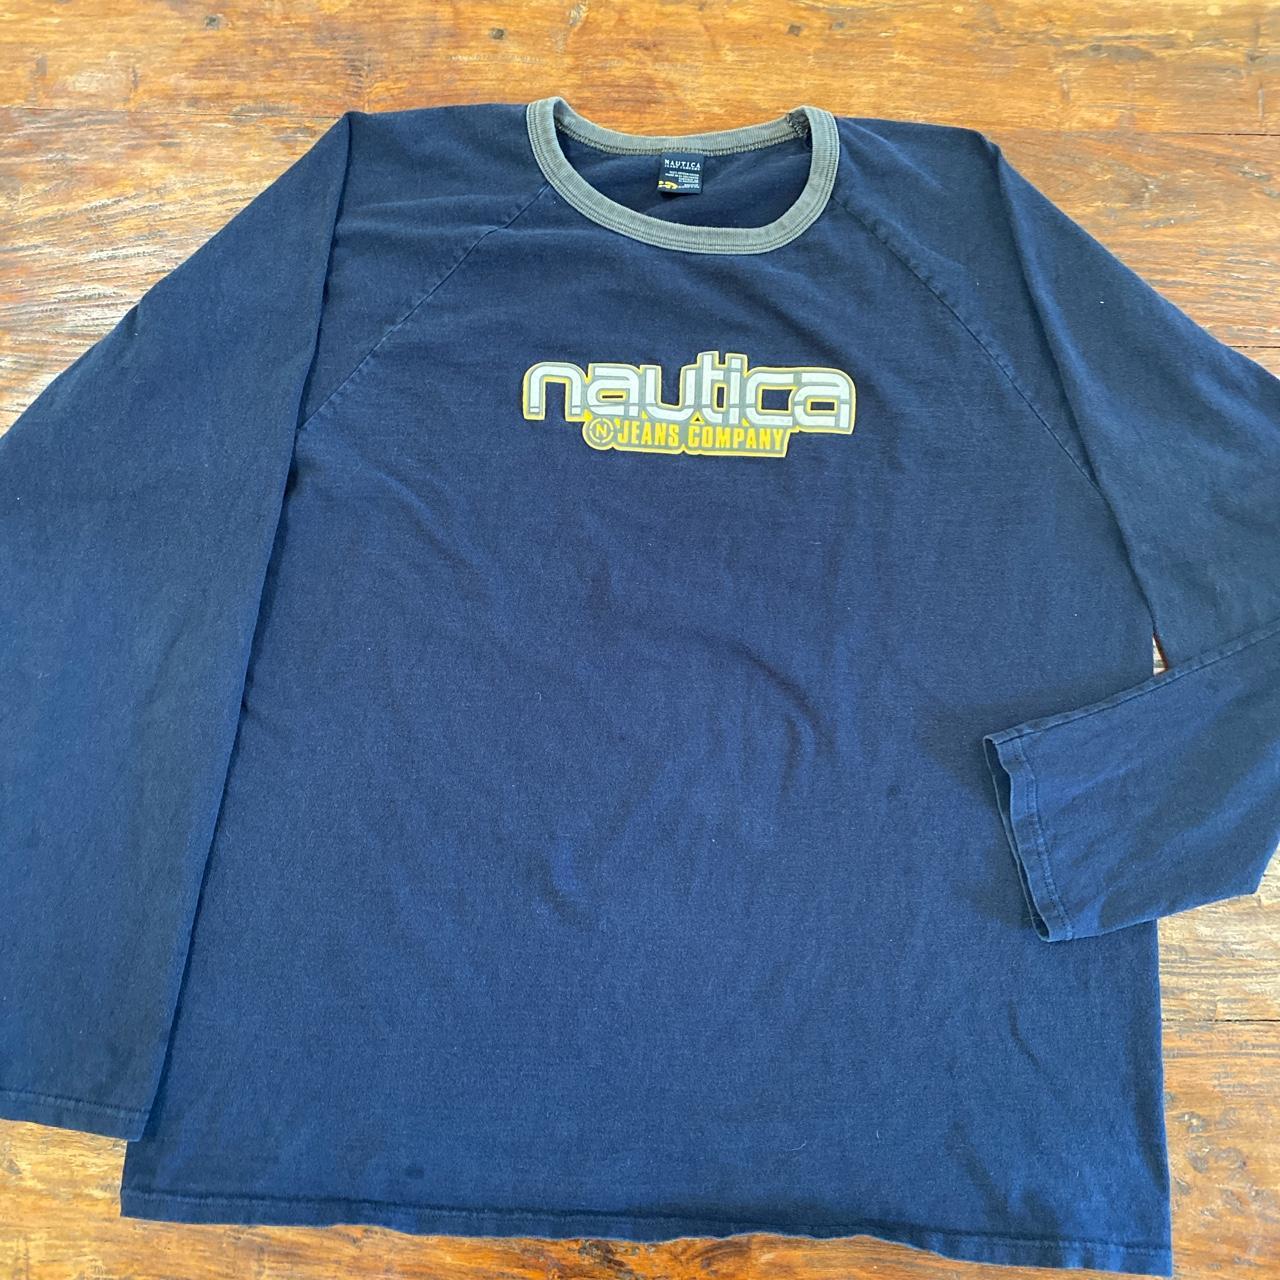 Nautica Men's Navy T-shirt